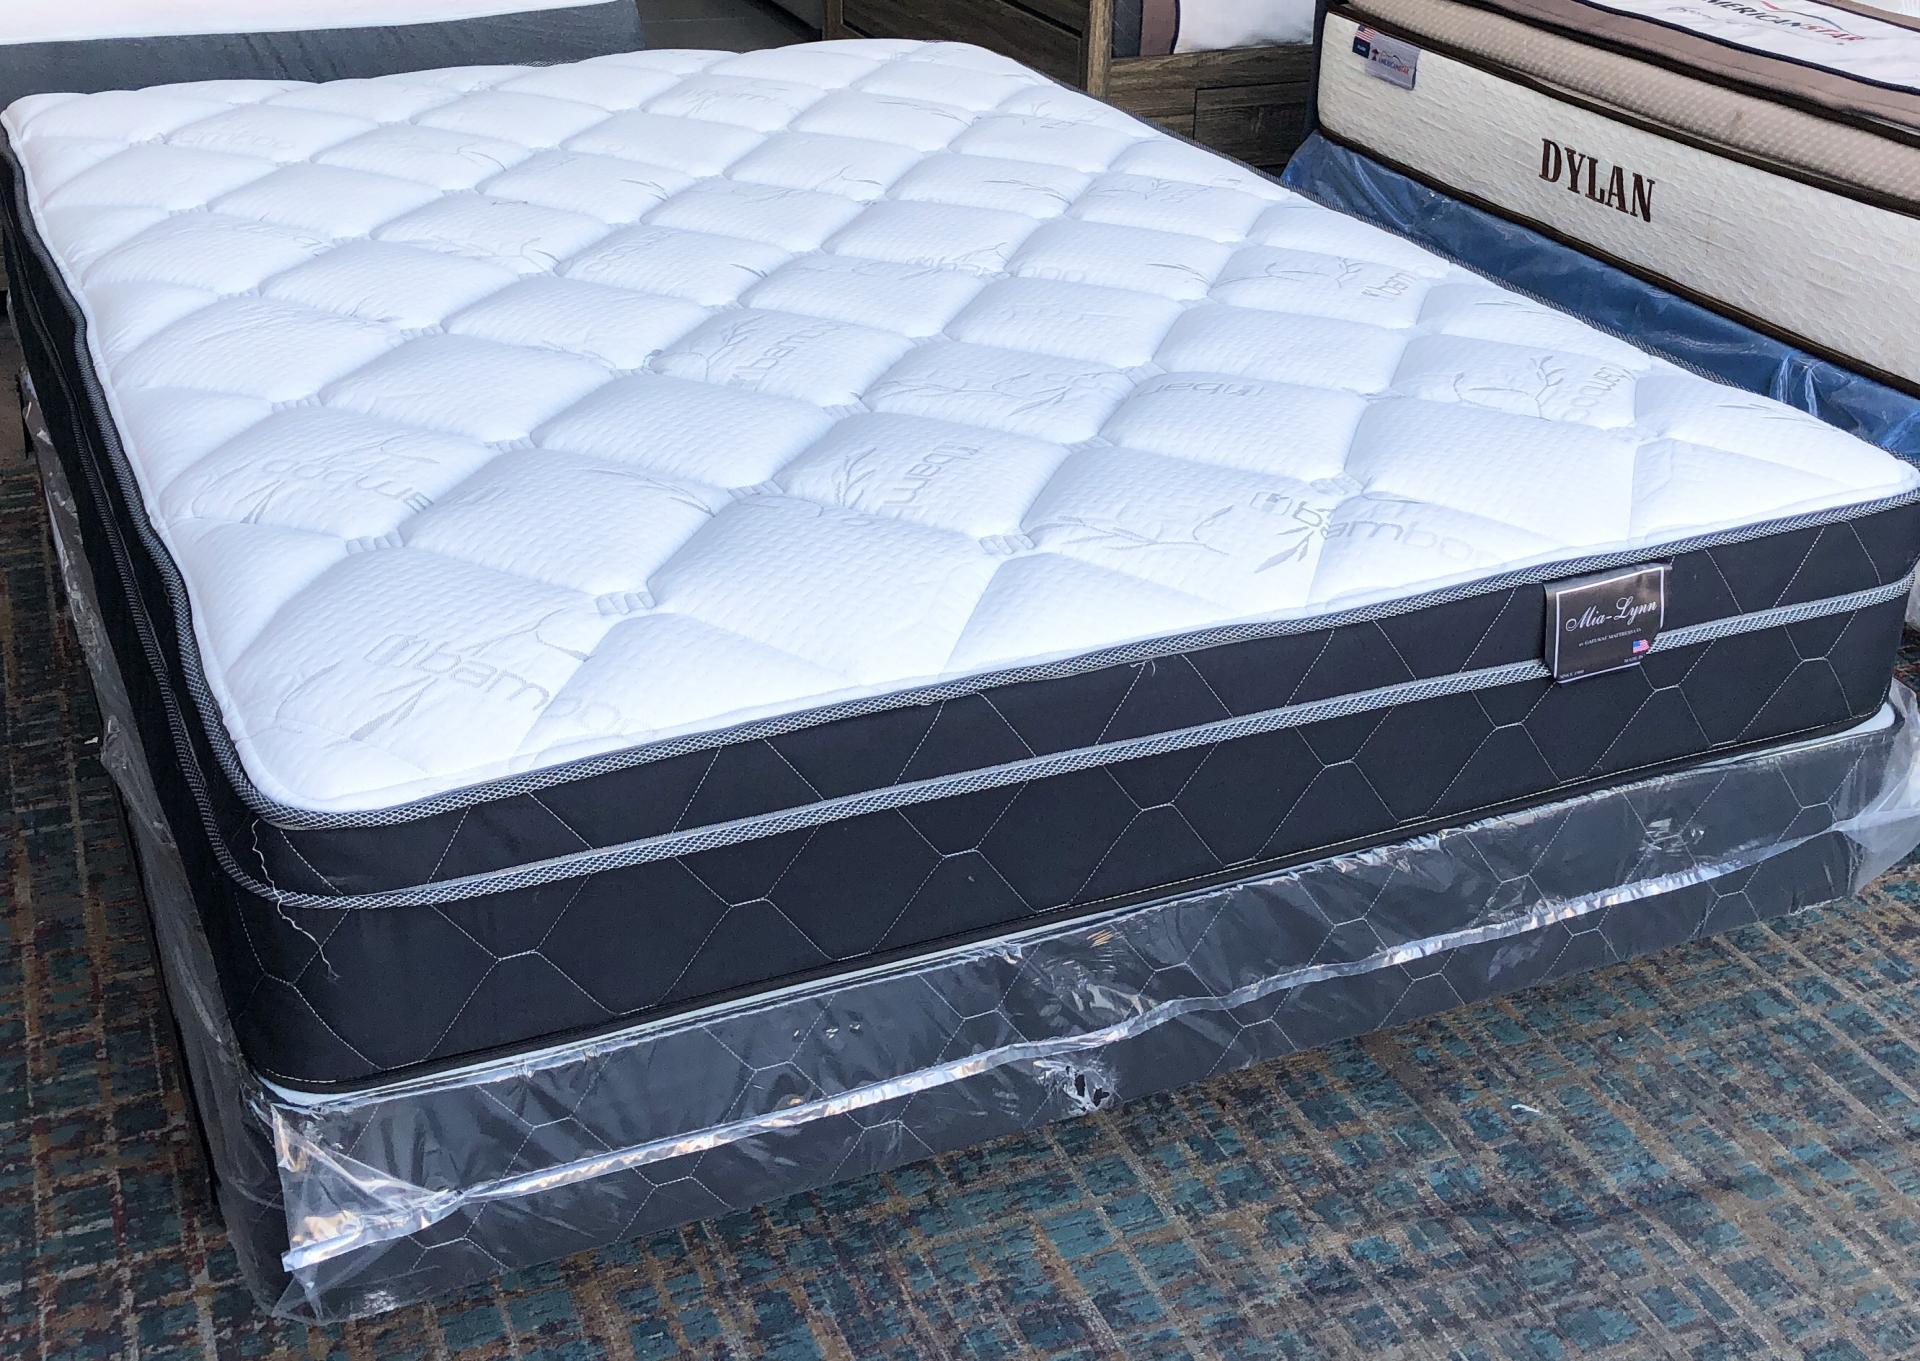 cooper californai king mattress